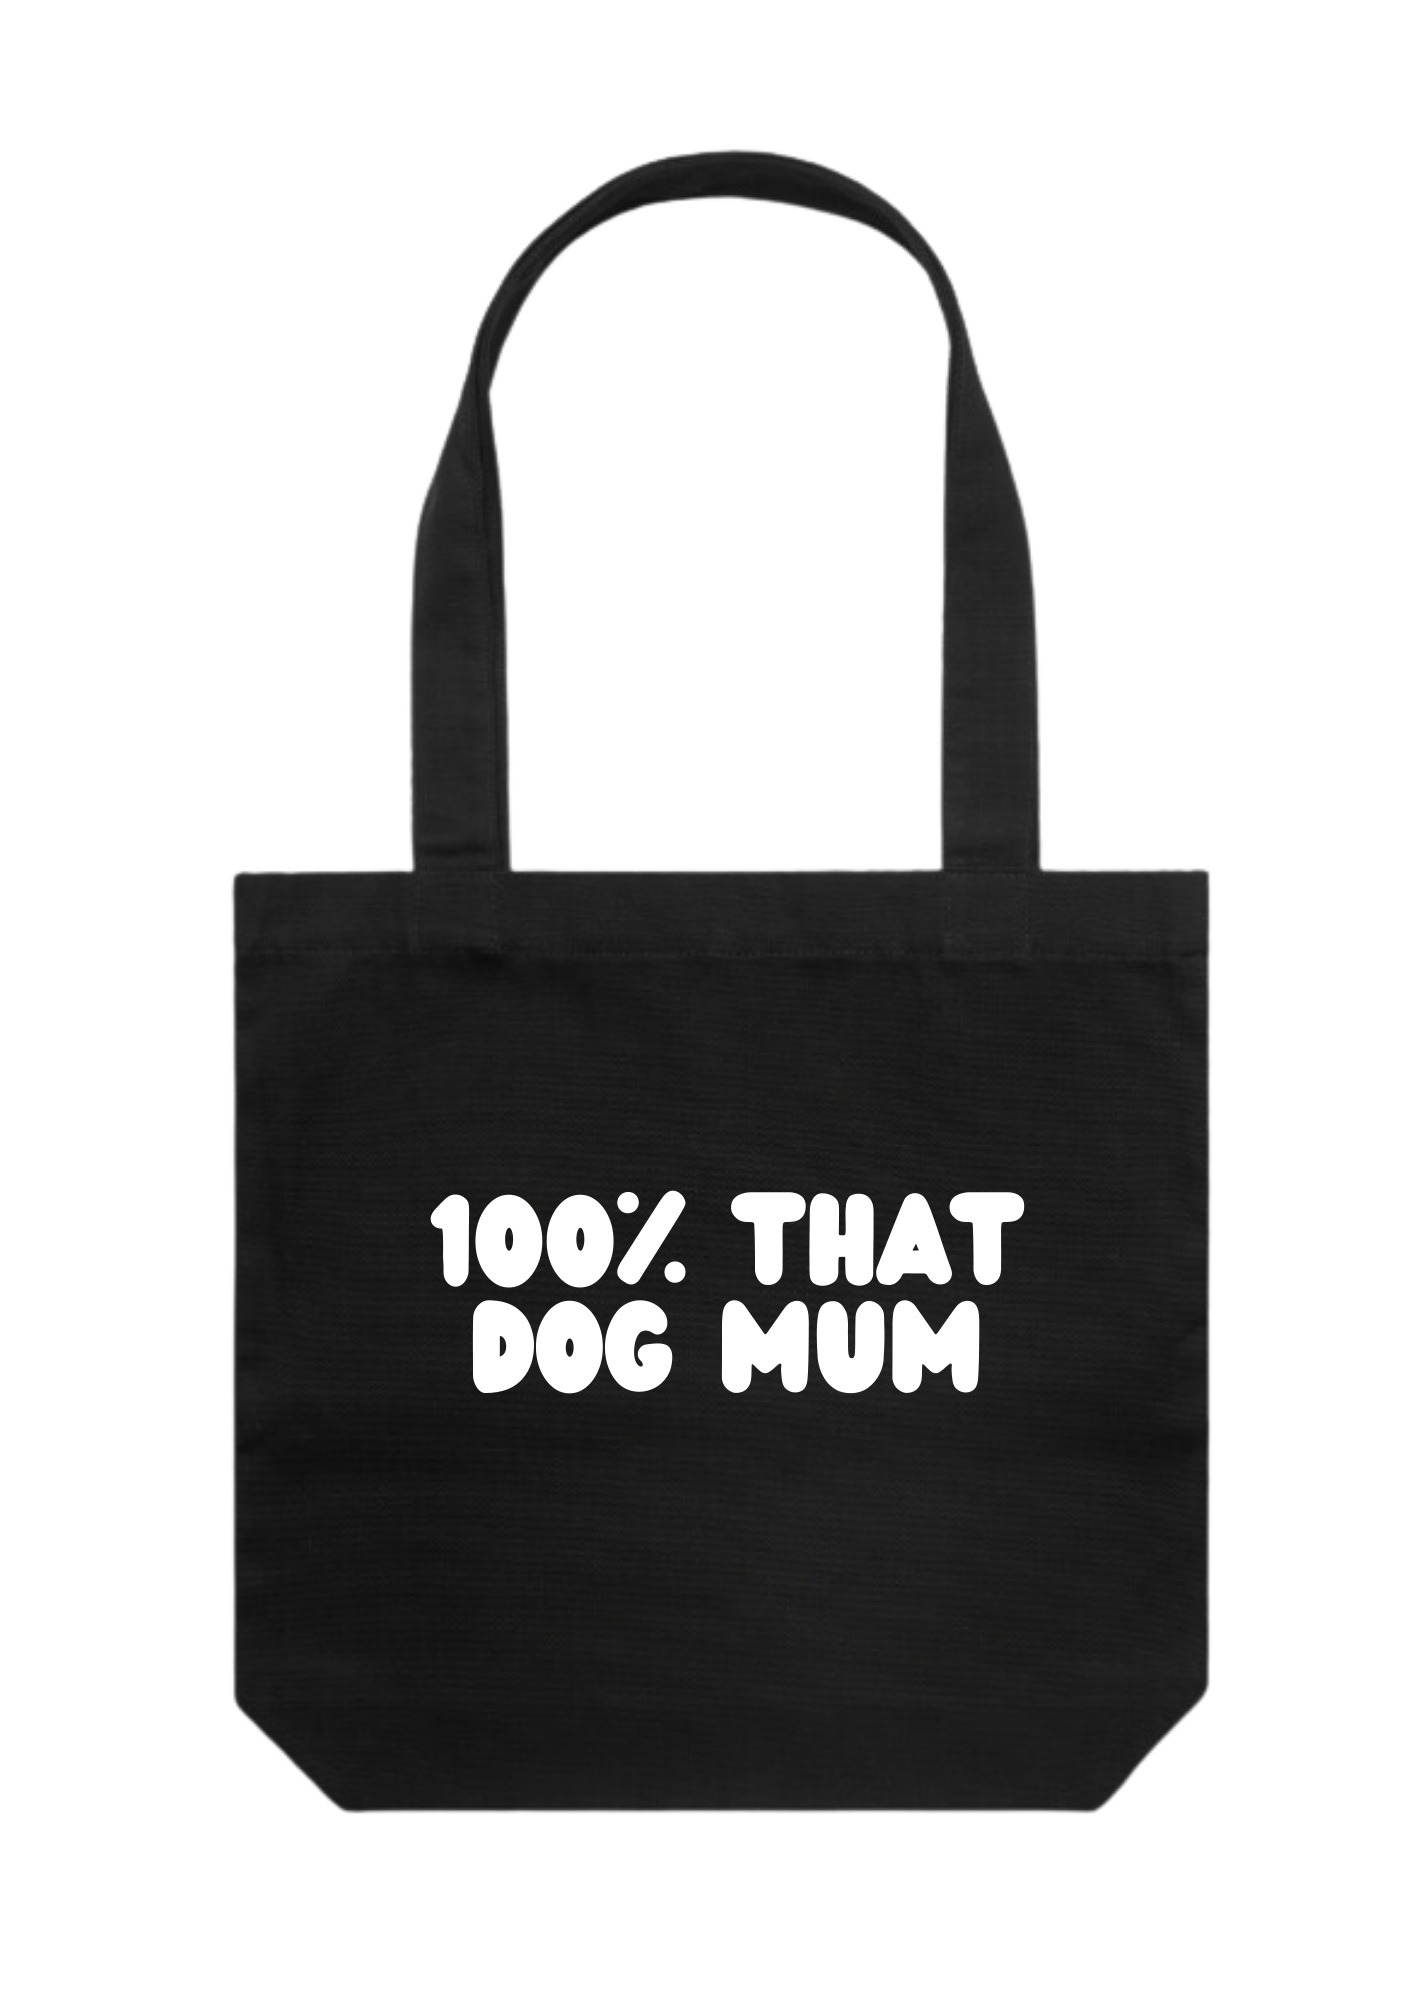 dog mum quote cotton canvas tote bag